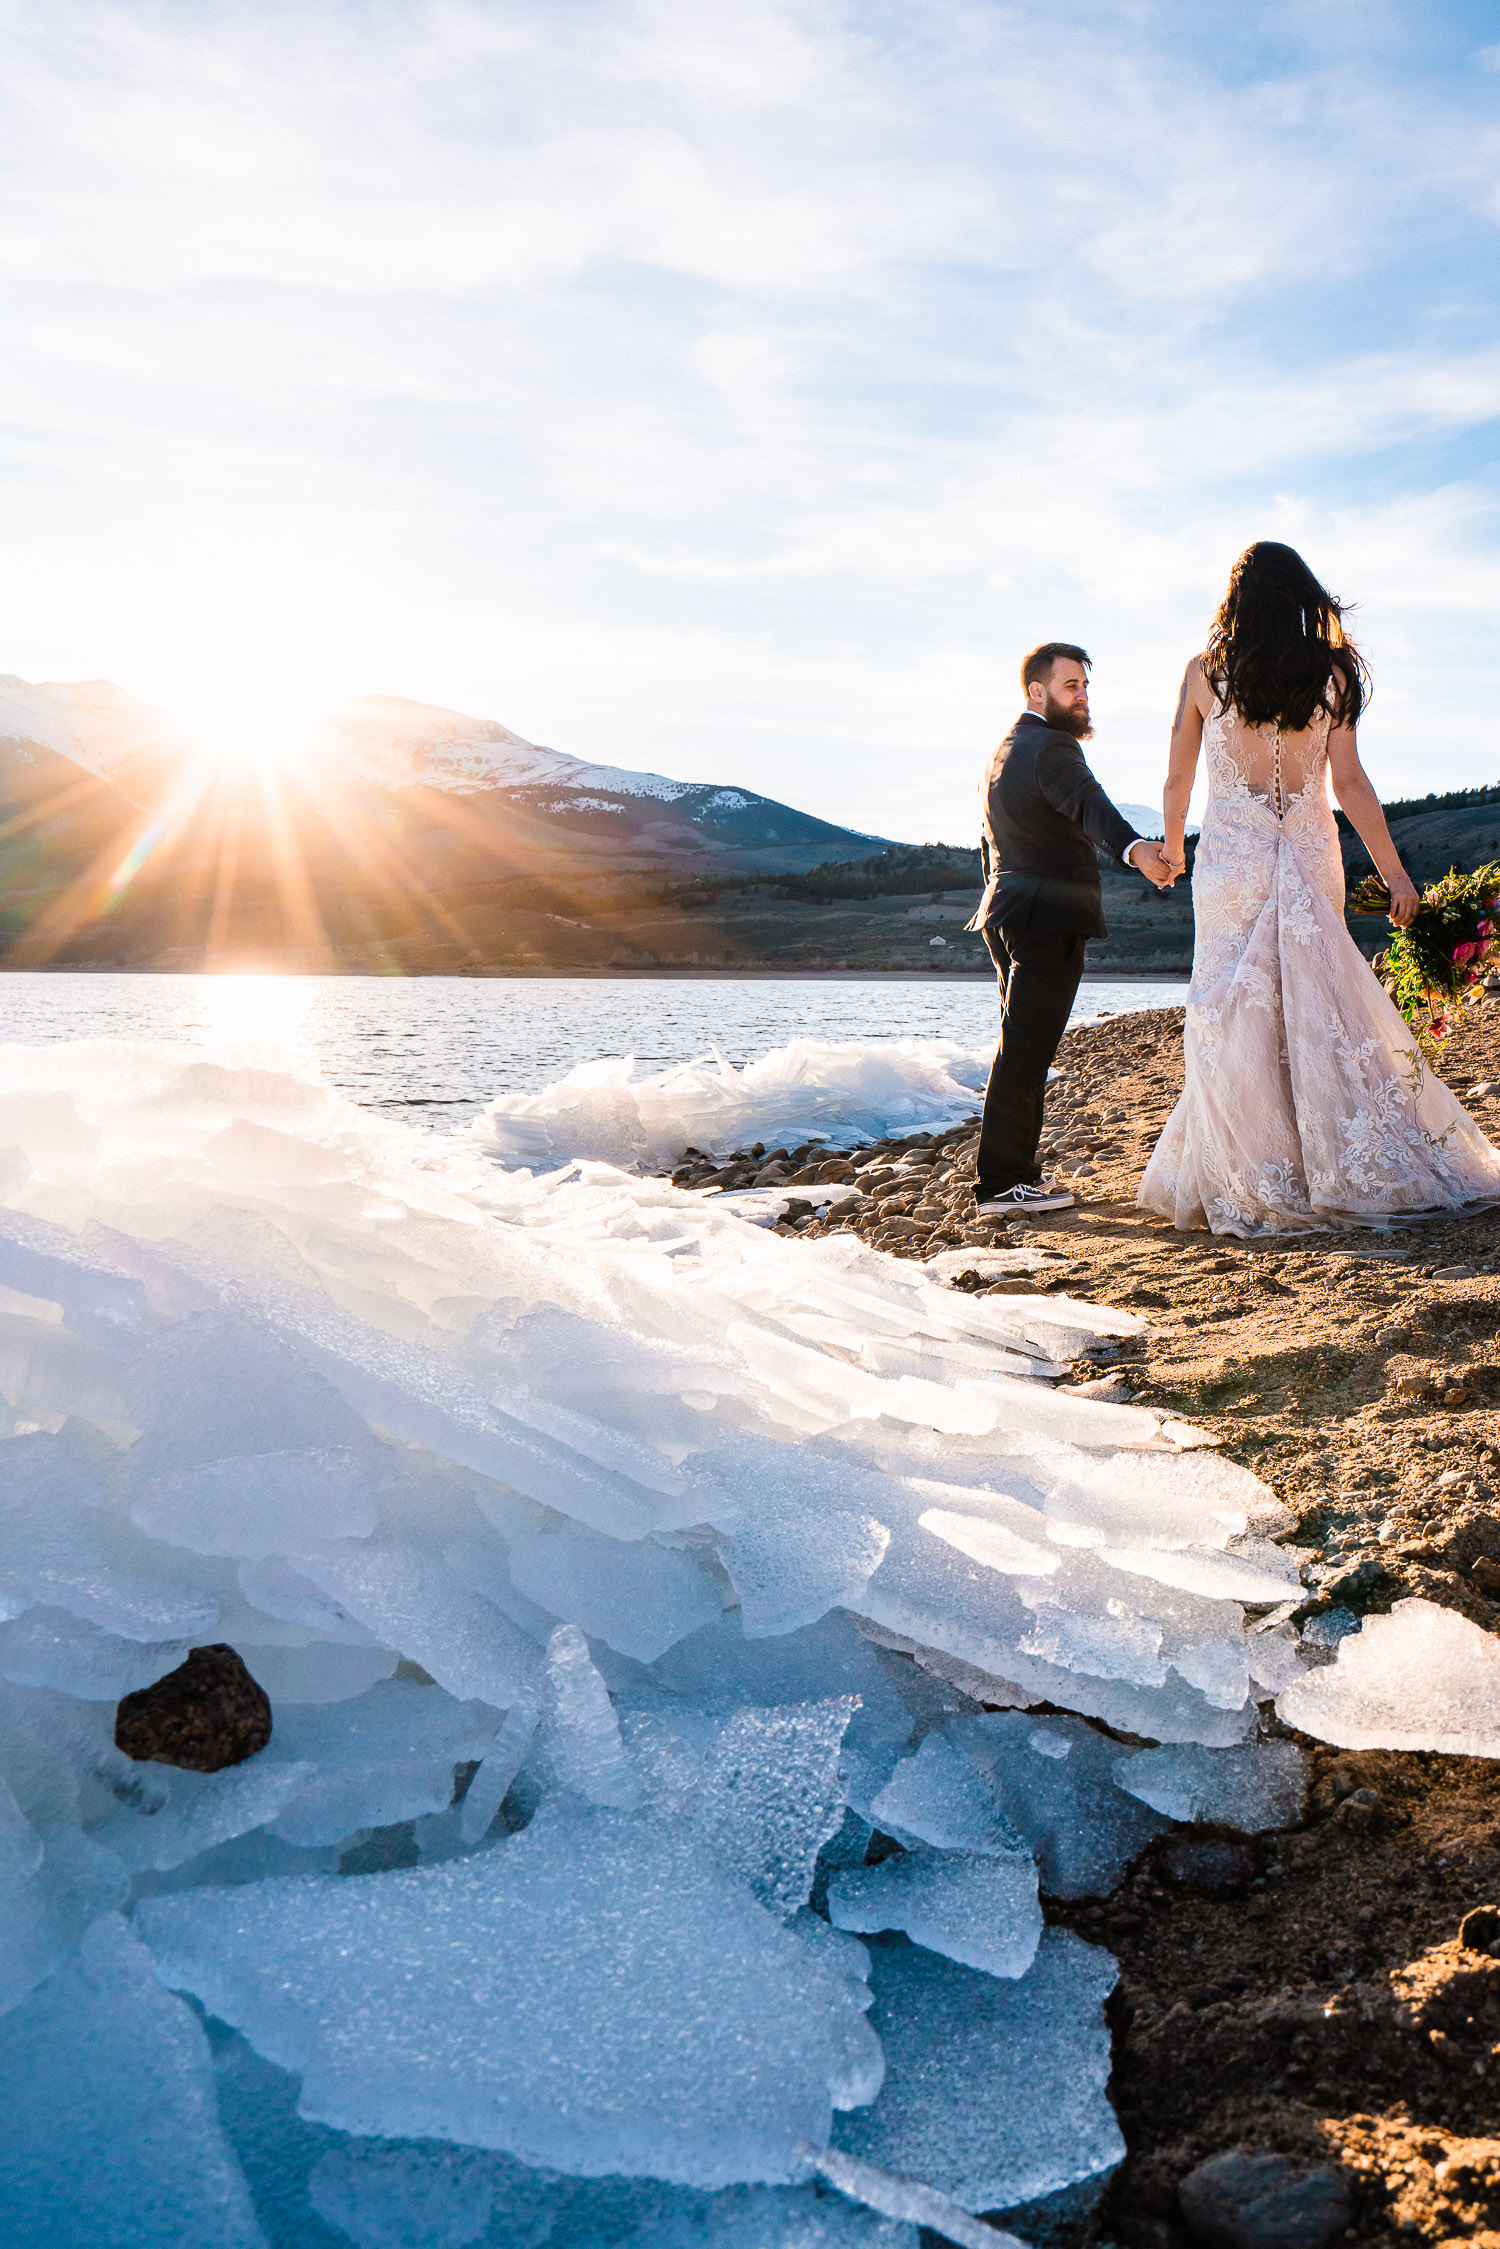 newlyweds explore frozen sheets of ice on a lake's shoreline